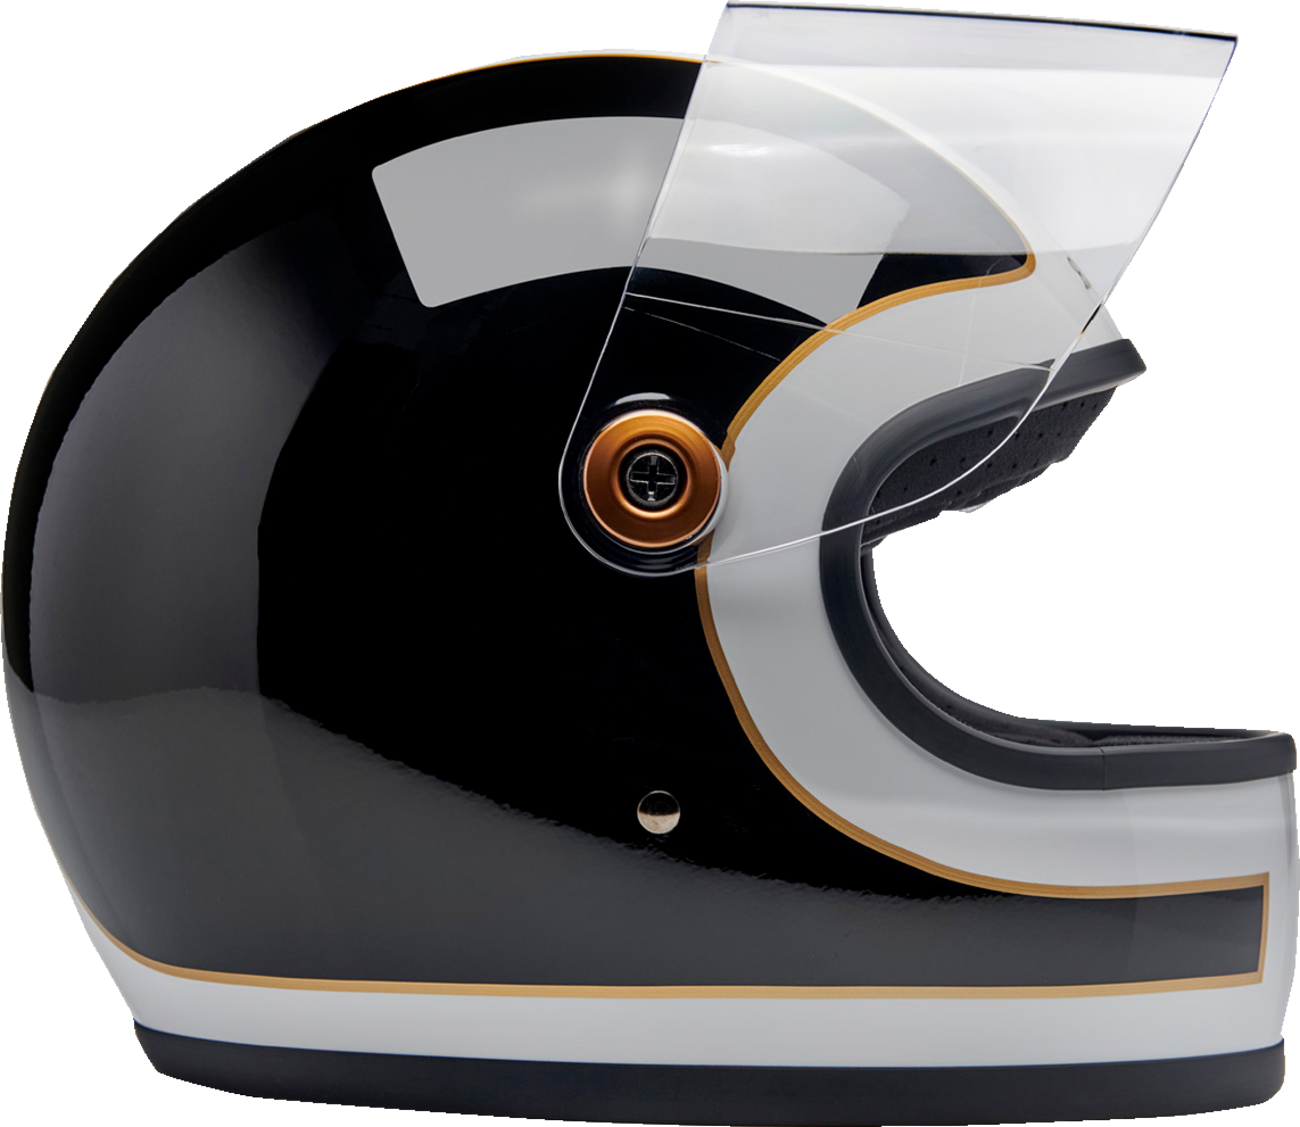 BILTWELL Gringo S Helmet - Gloss White/Black Tracker - XS 1003-566-501